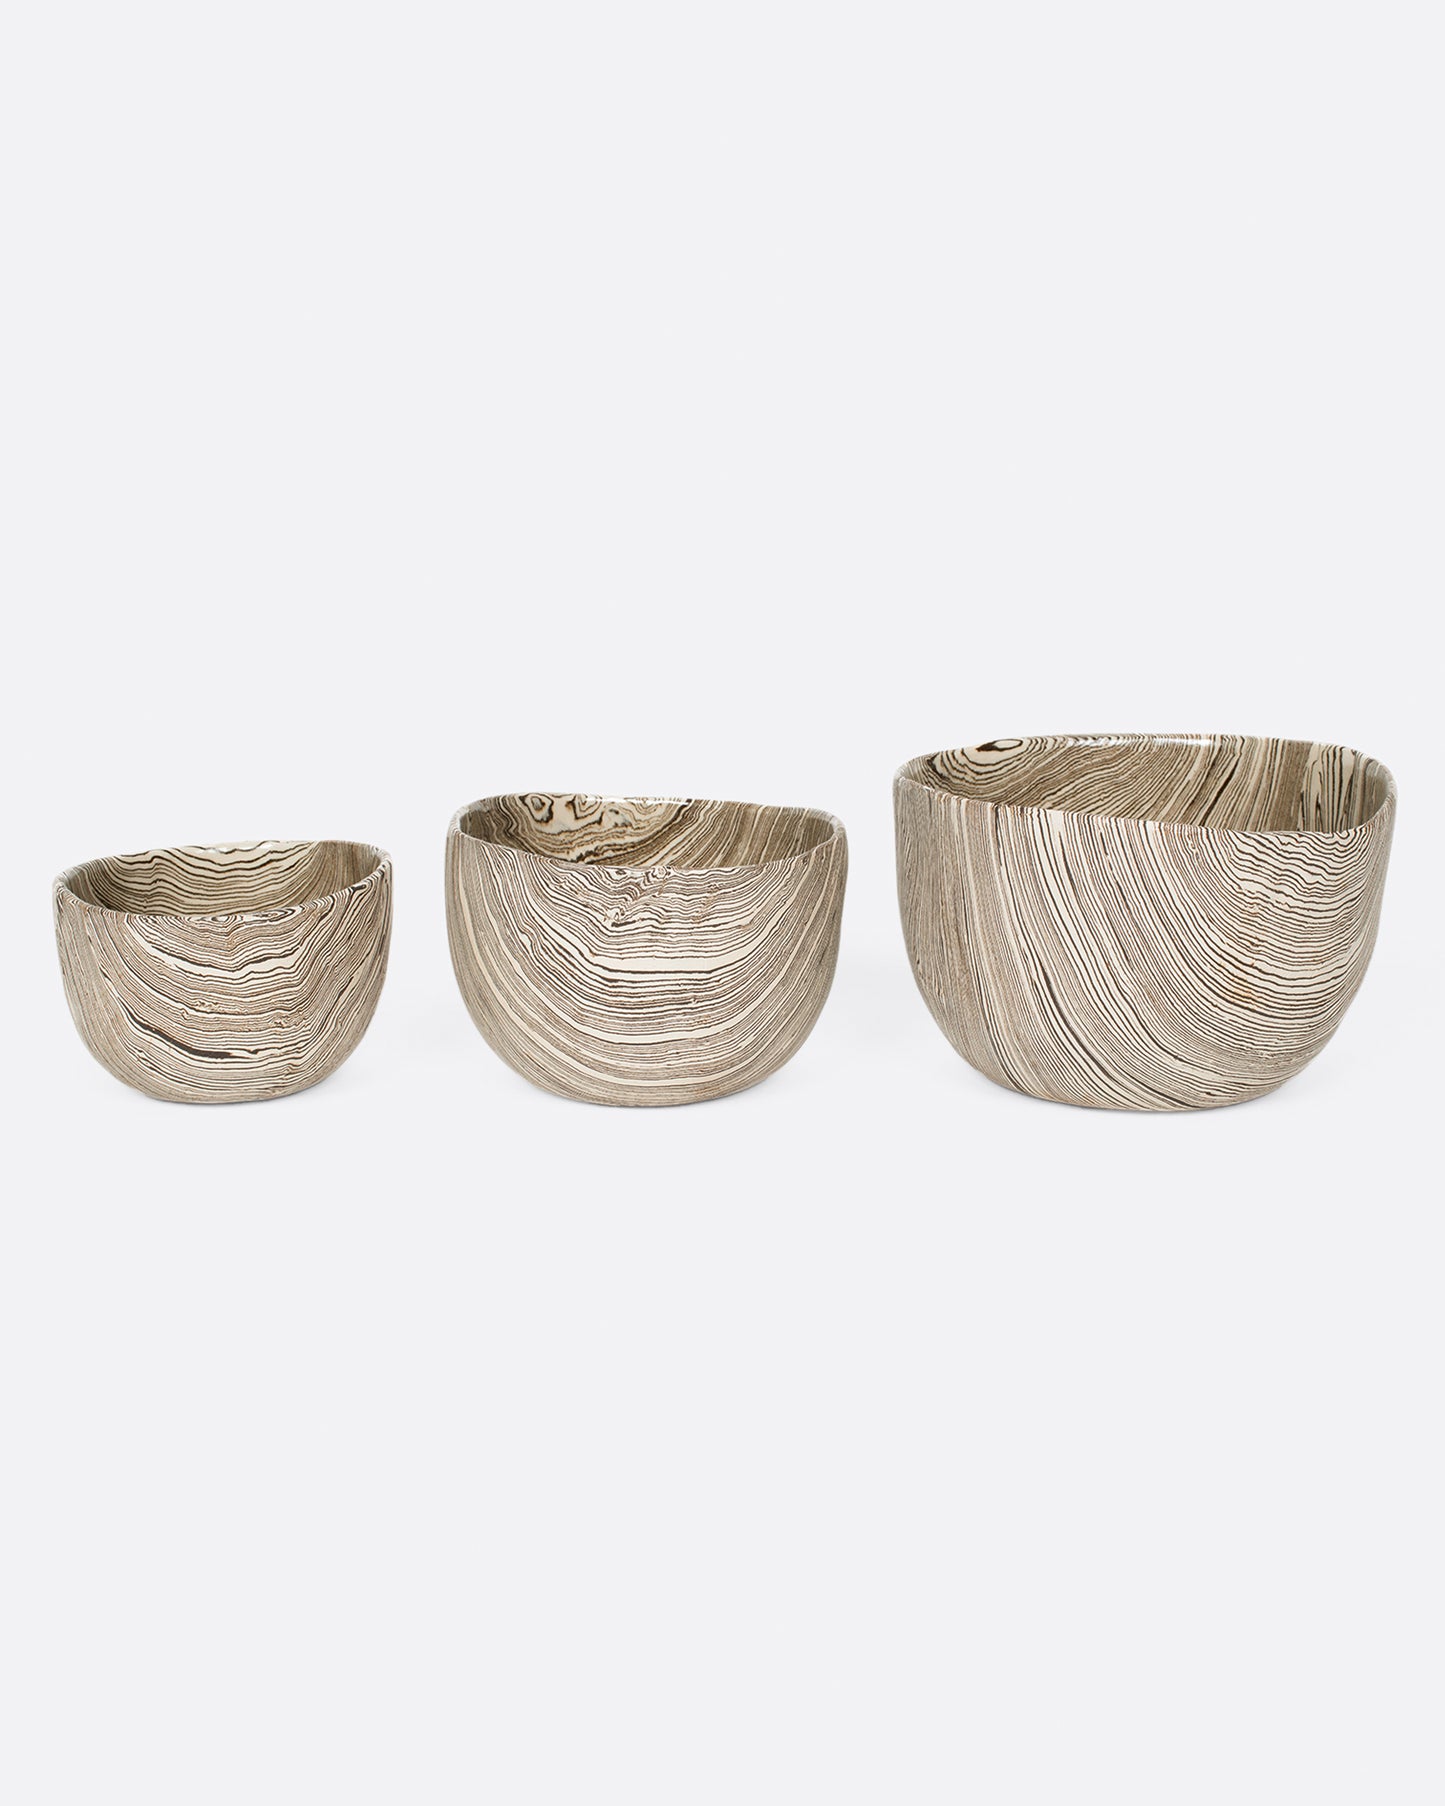 A group of three white and brown stoneware nerikomi bowls.